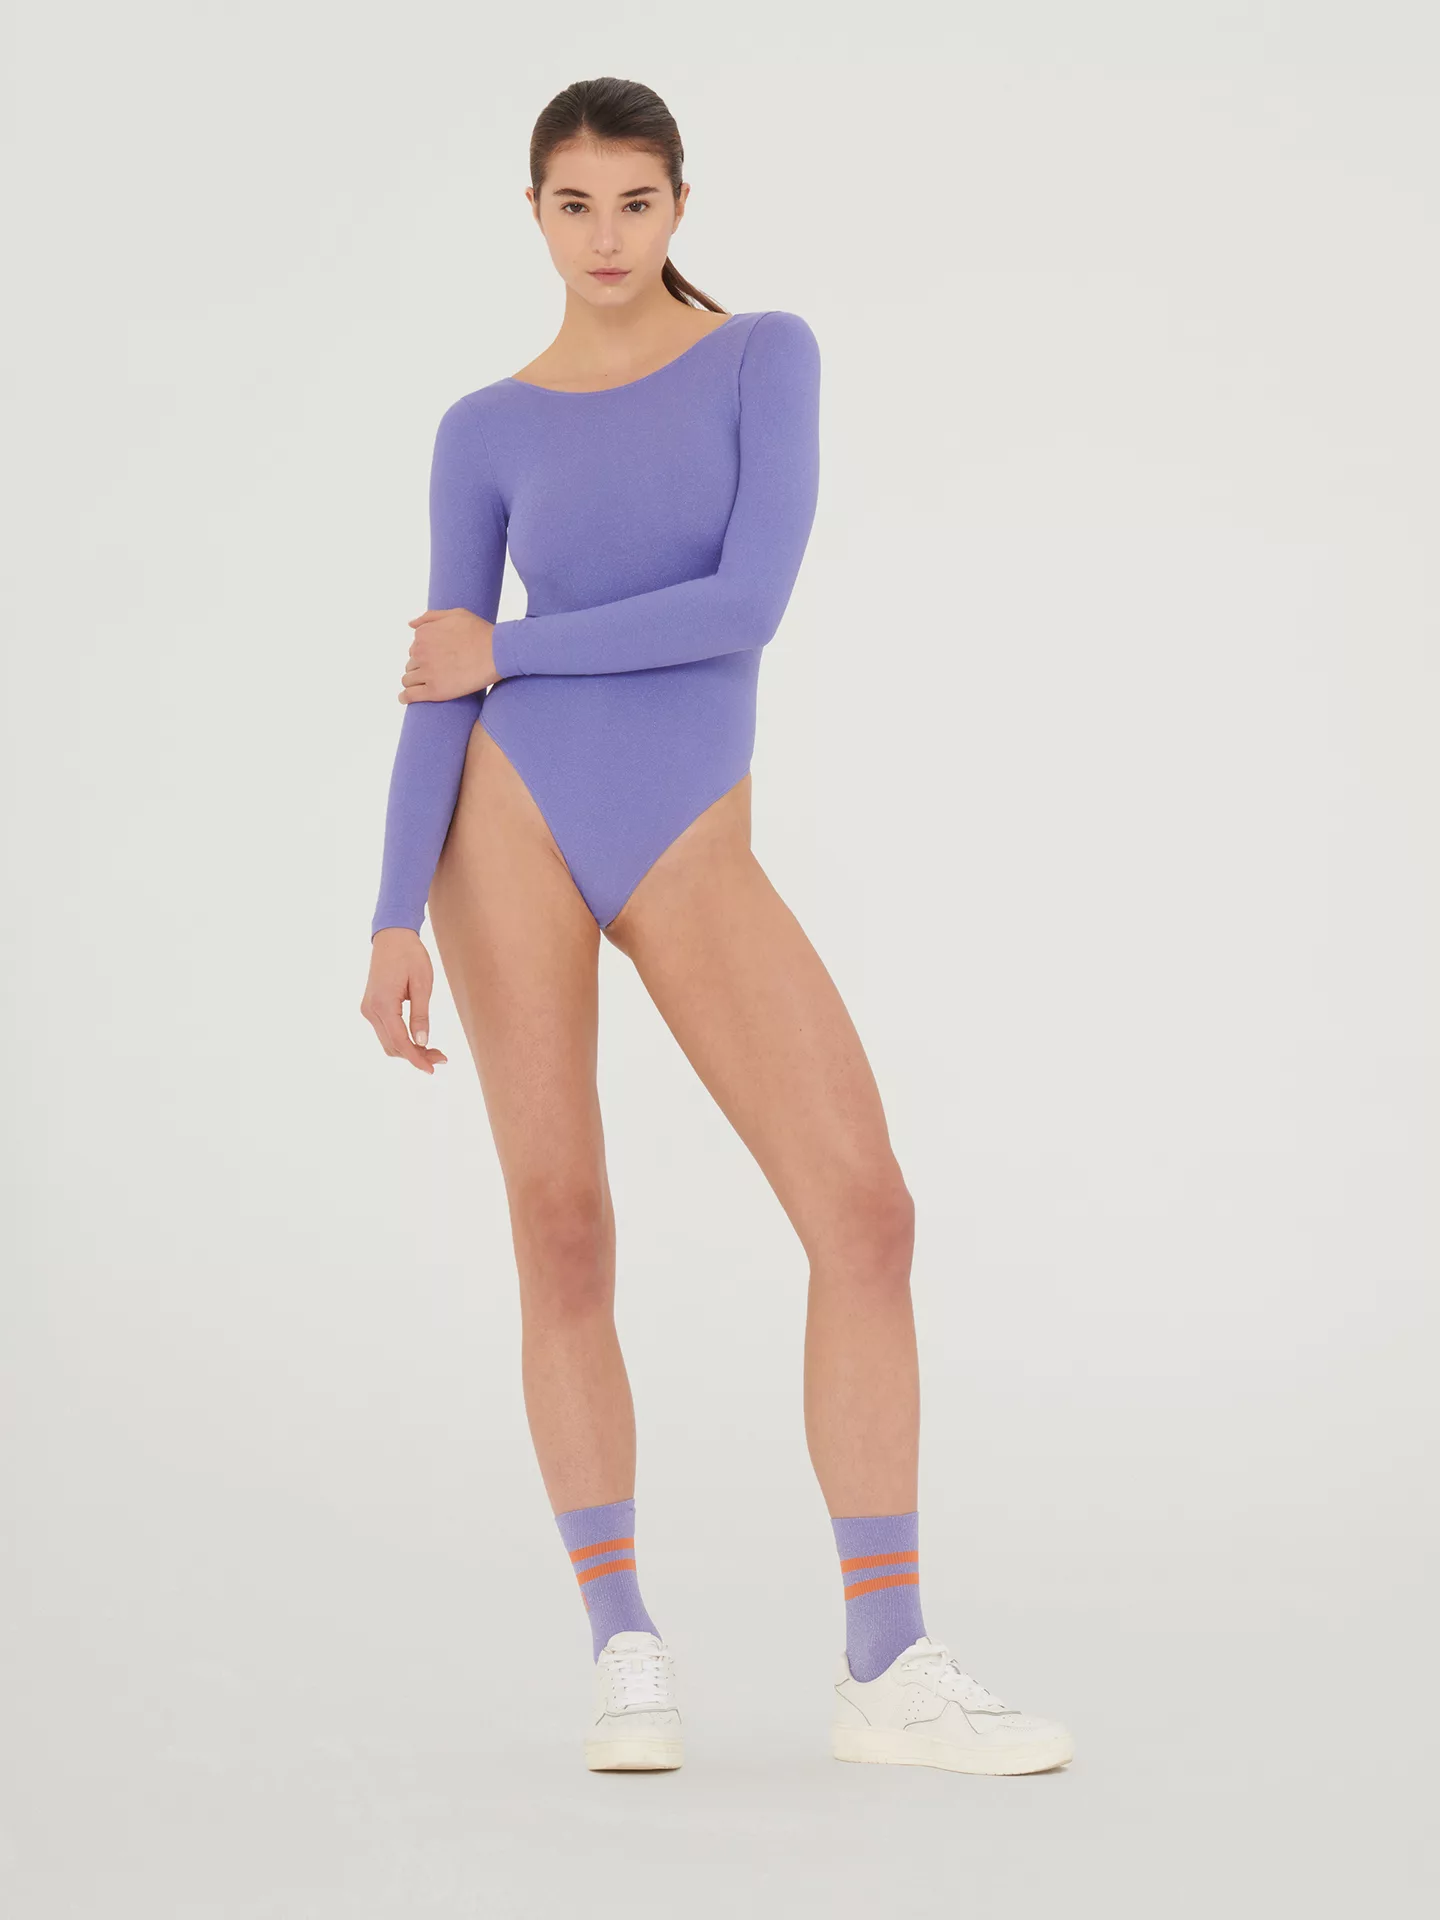 Wolford - Shiny String Body, Frau, ultra violet/light aquamarine, Größe: XS günstig online kaufen